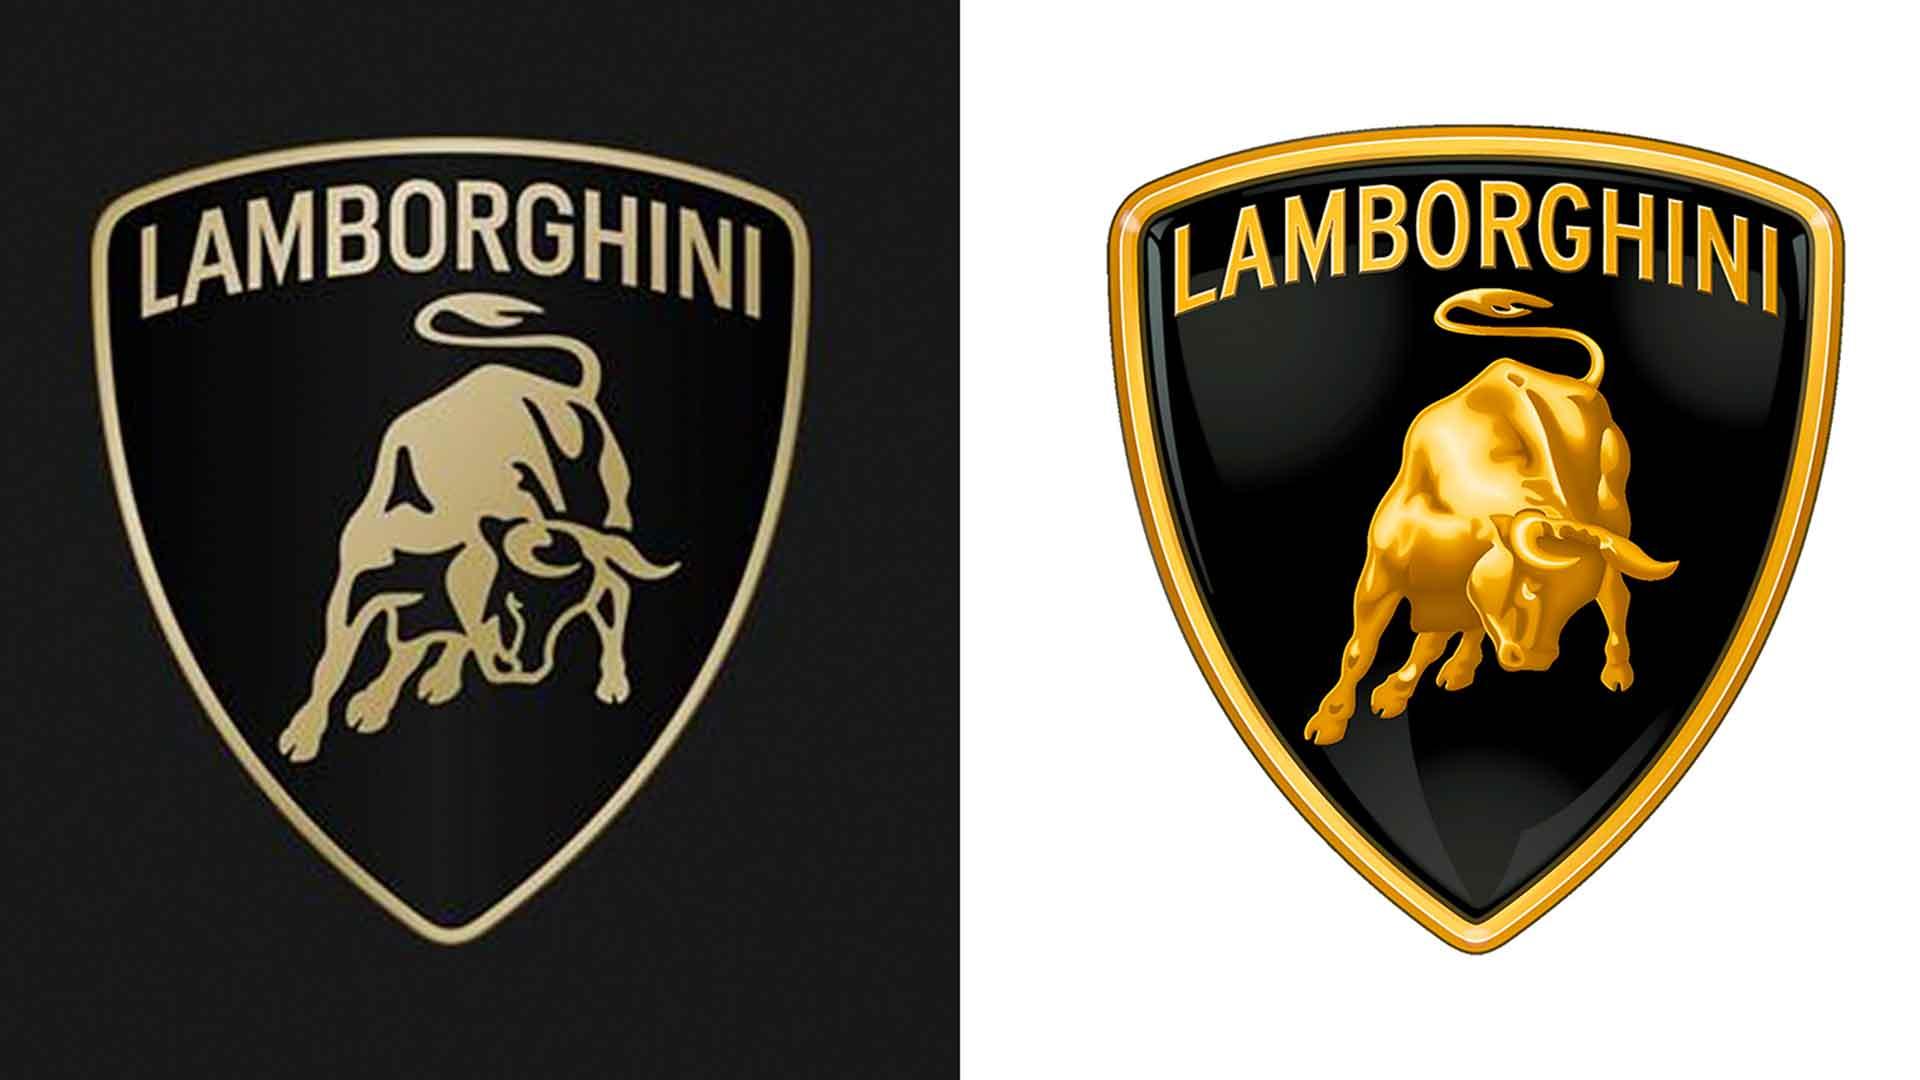 A logo to match the old new Lamborghini